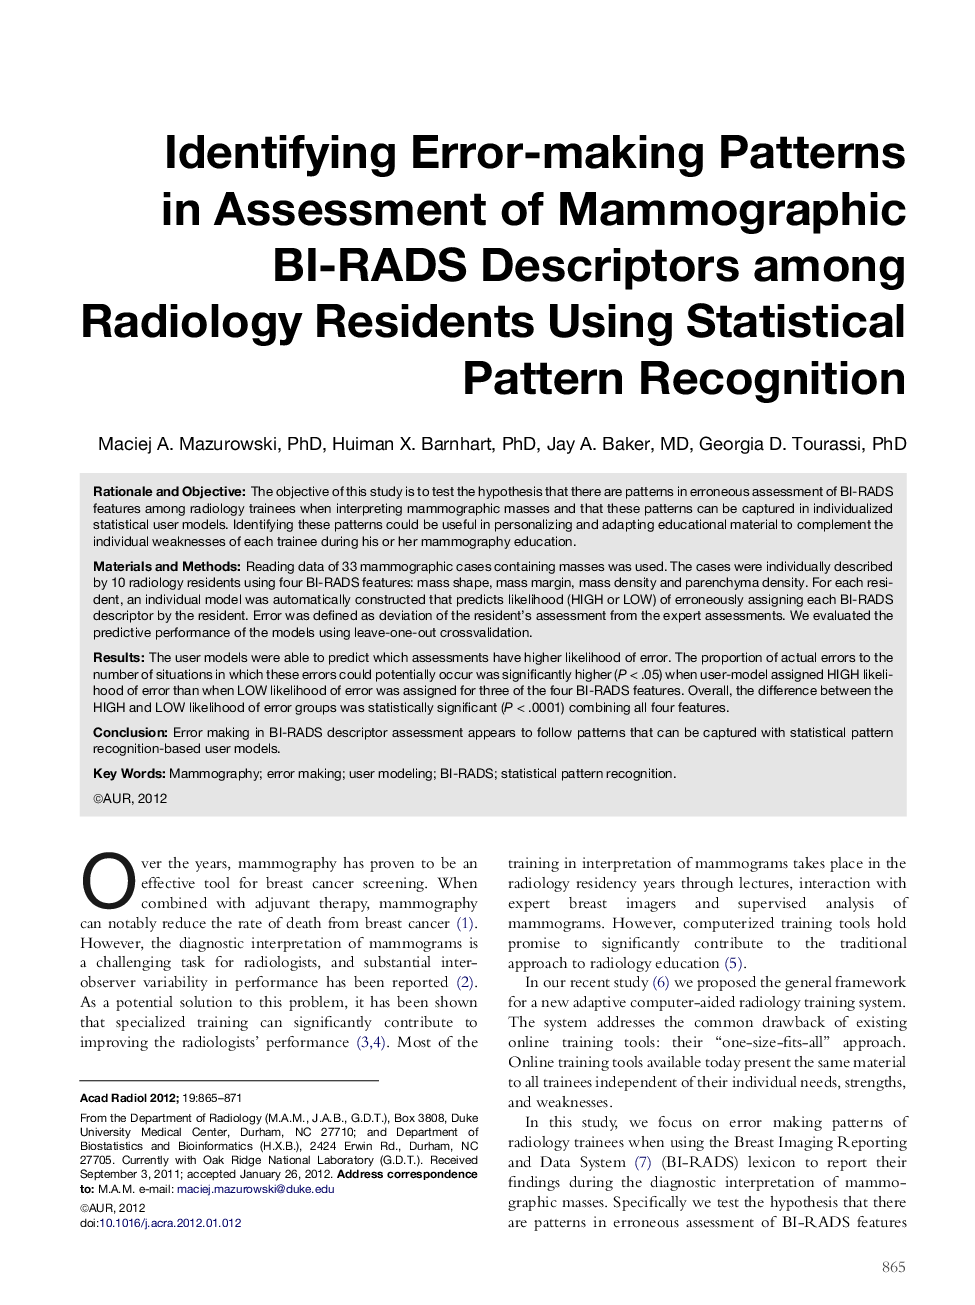 Identifying Error-making Patterns inÂ Assessment of Mammographic BI-RADS Descriptors among Radiology Residents Using Statistical Pattern Recognition